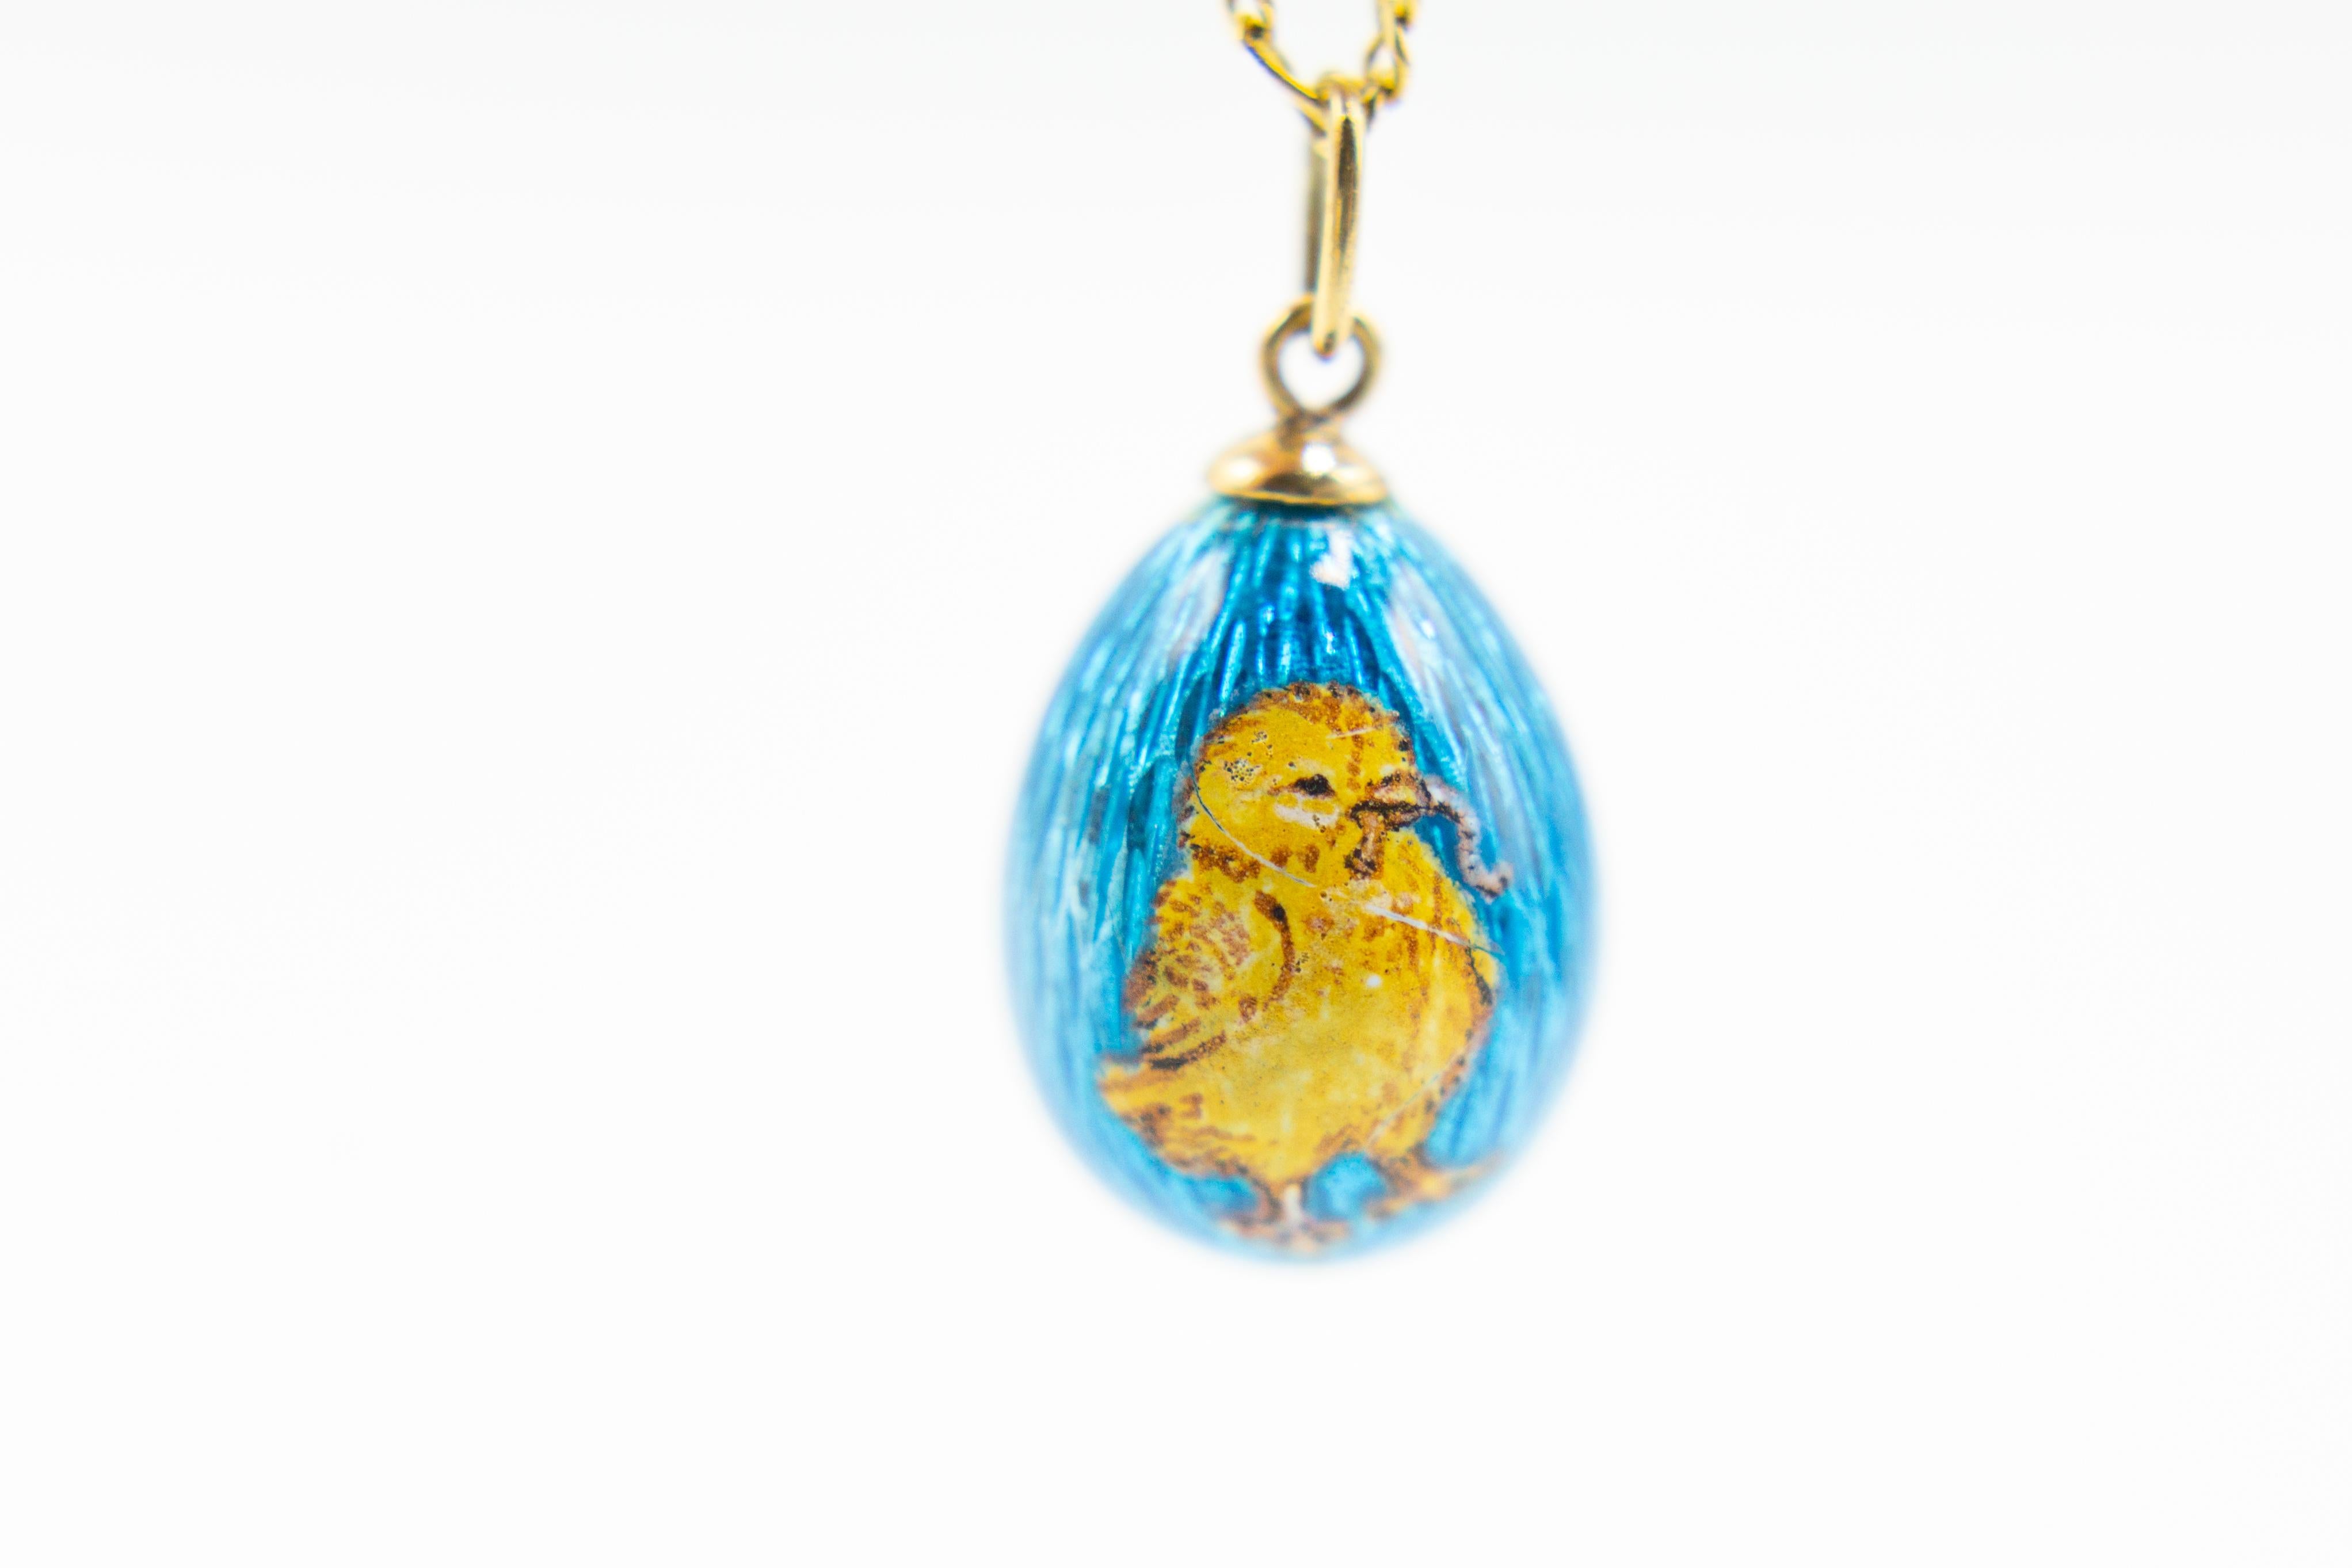 Russian 14 Karat Gold Guilloche Enamel Egg Chick Charm Pendent, Iridescent For Sale 9